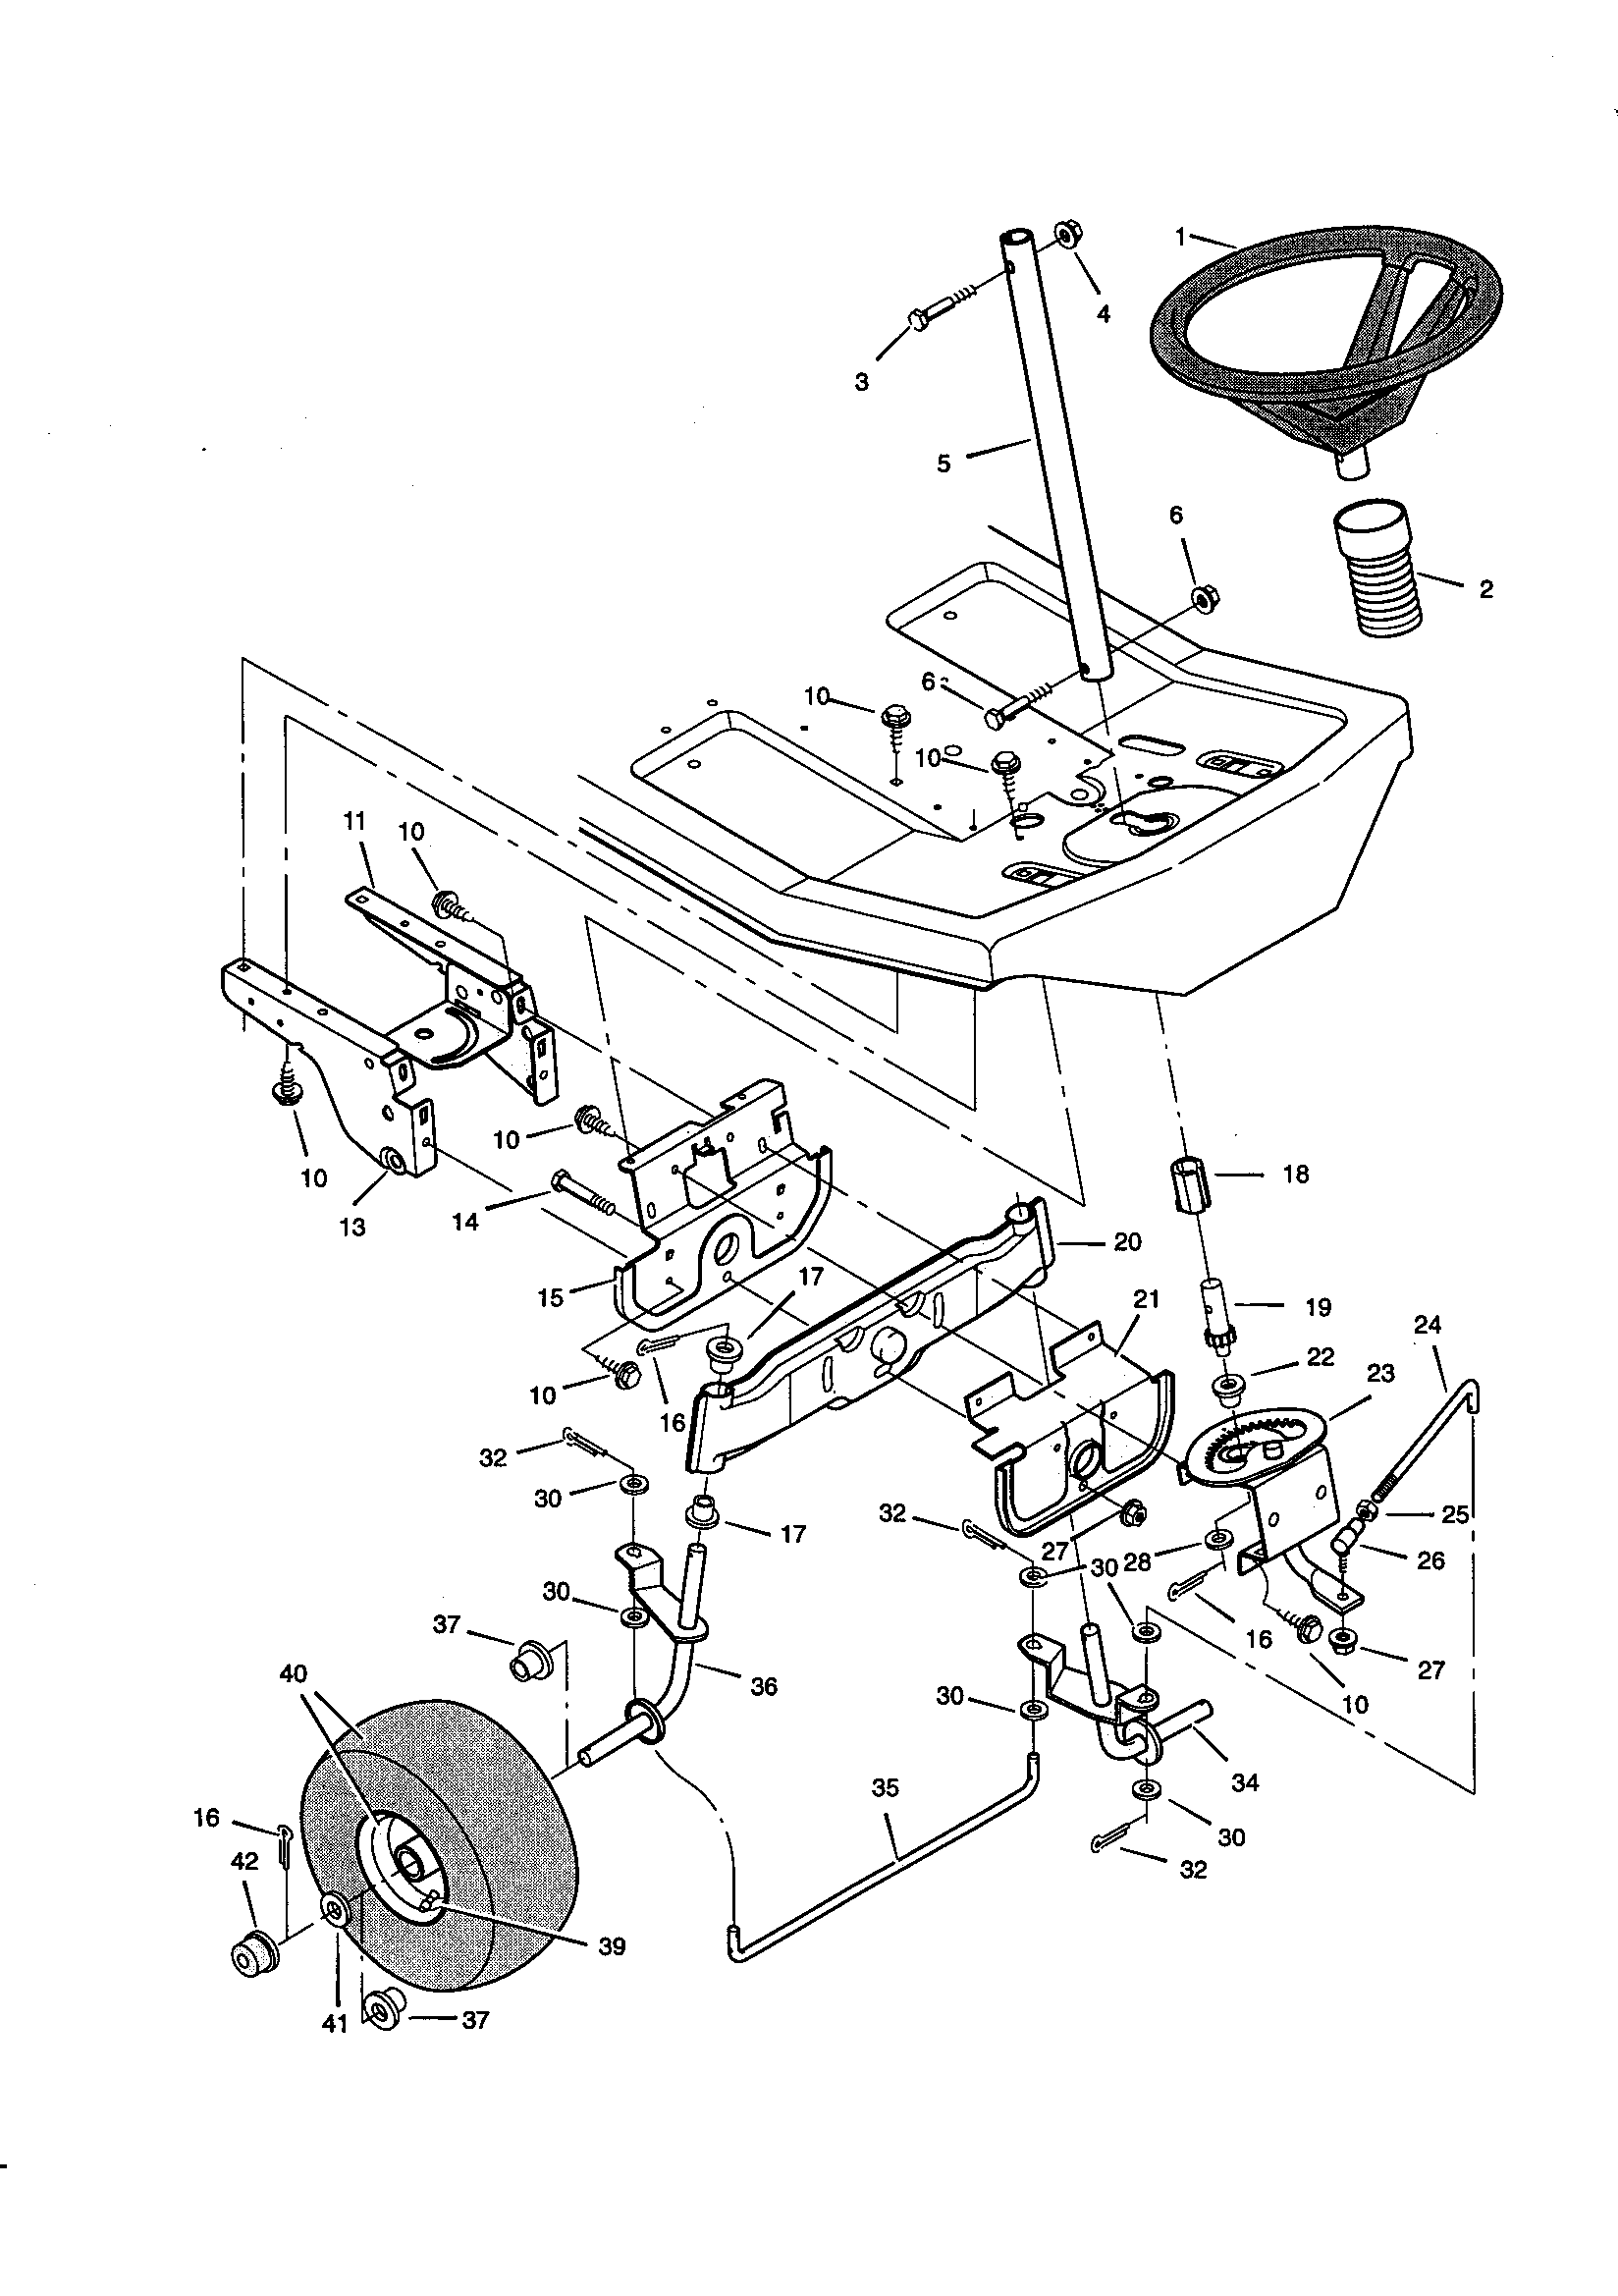 Craftsman ltx 1000 parts diagram